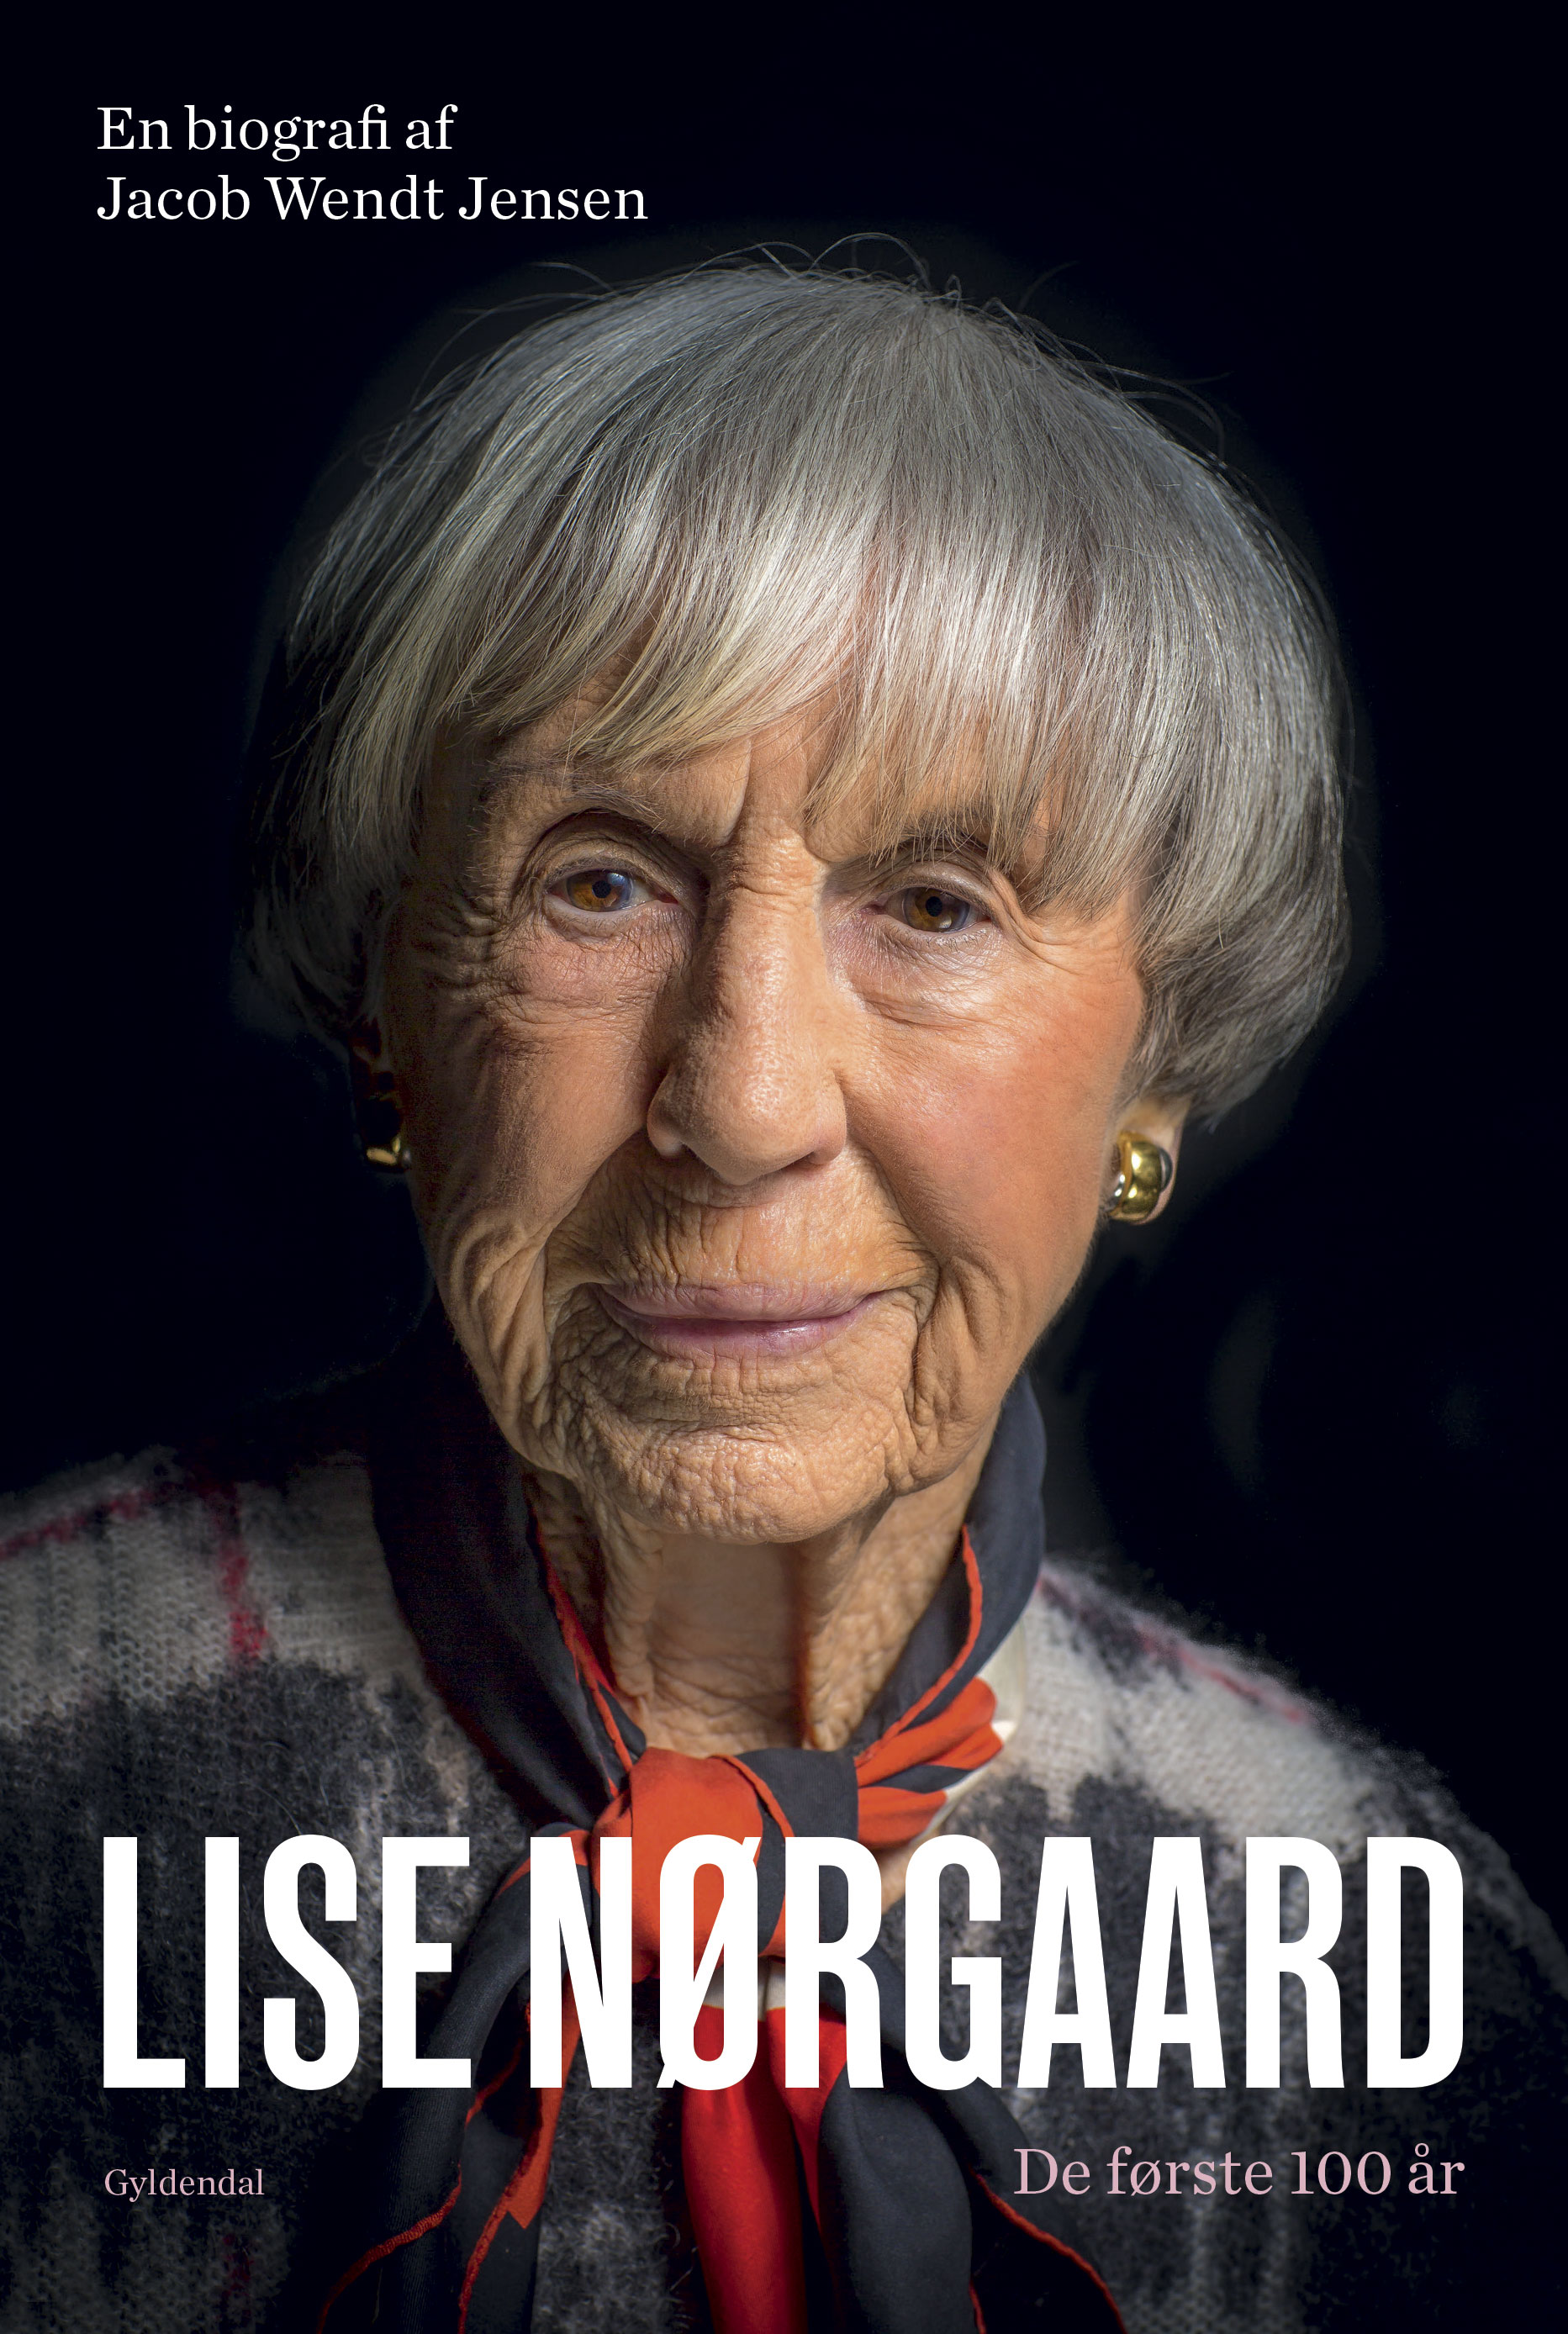 Forside med Lise Nørgaard